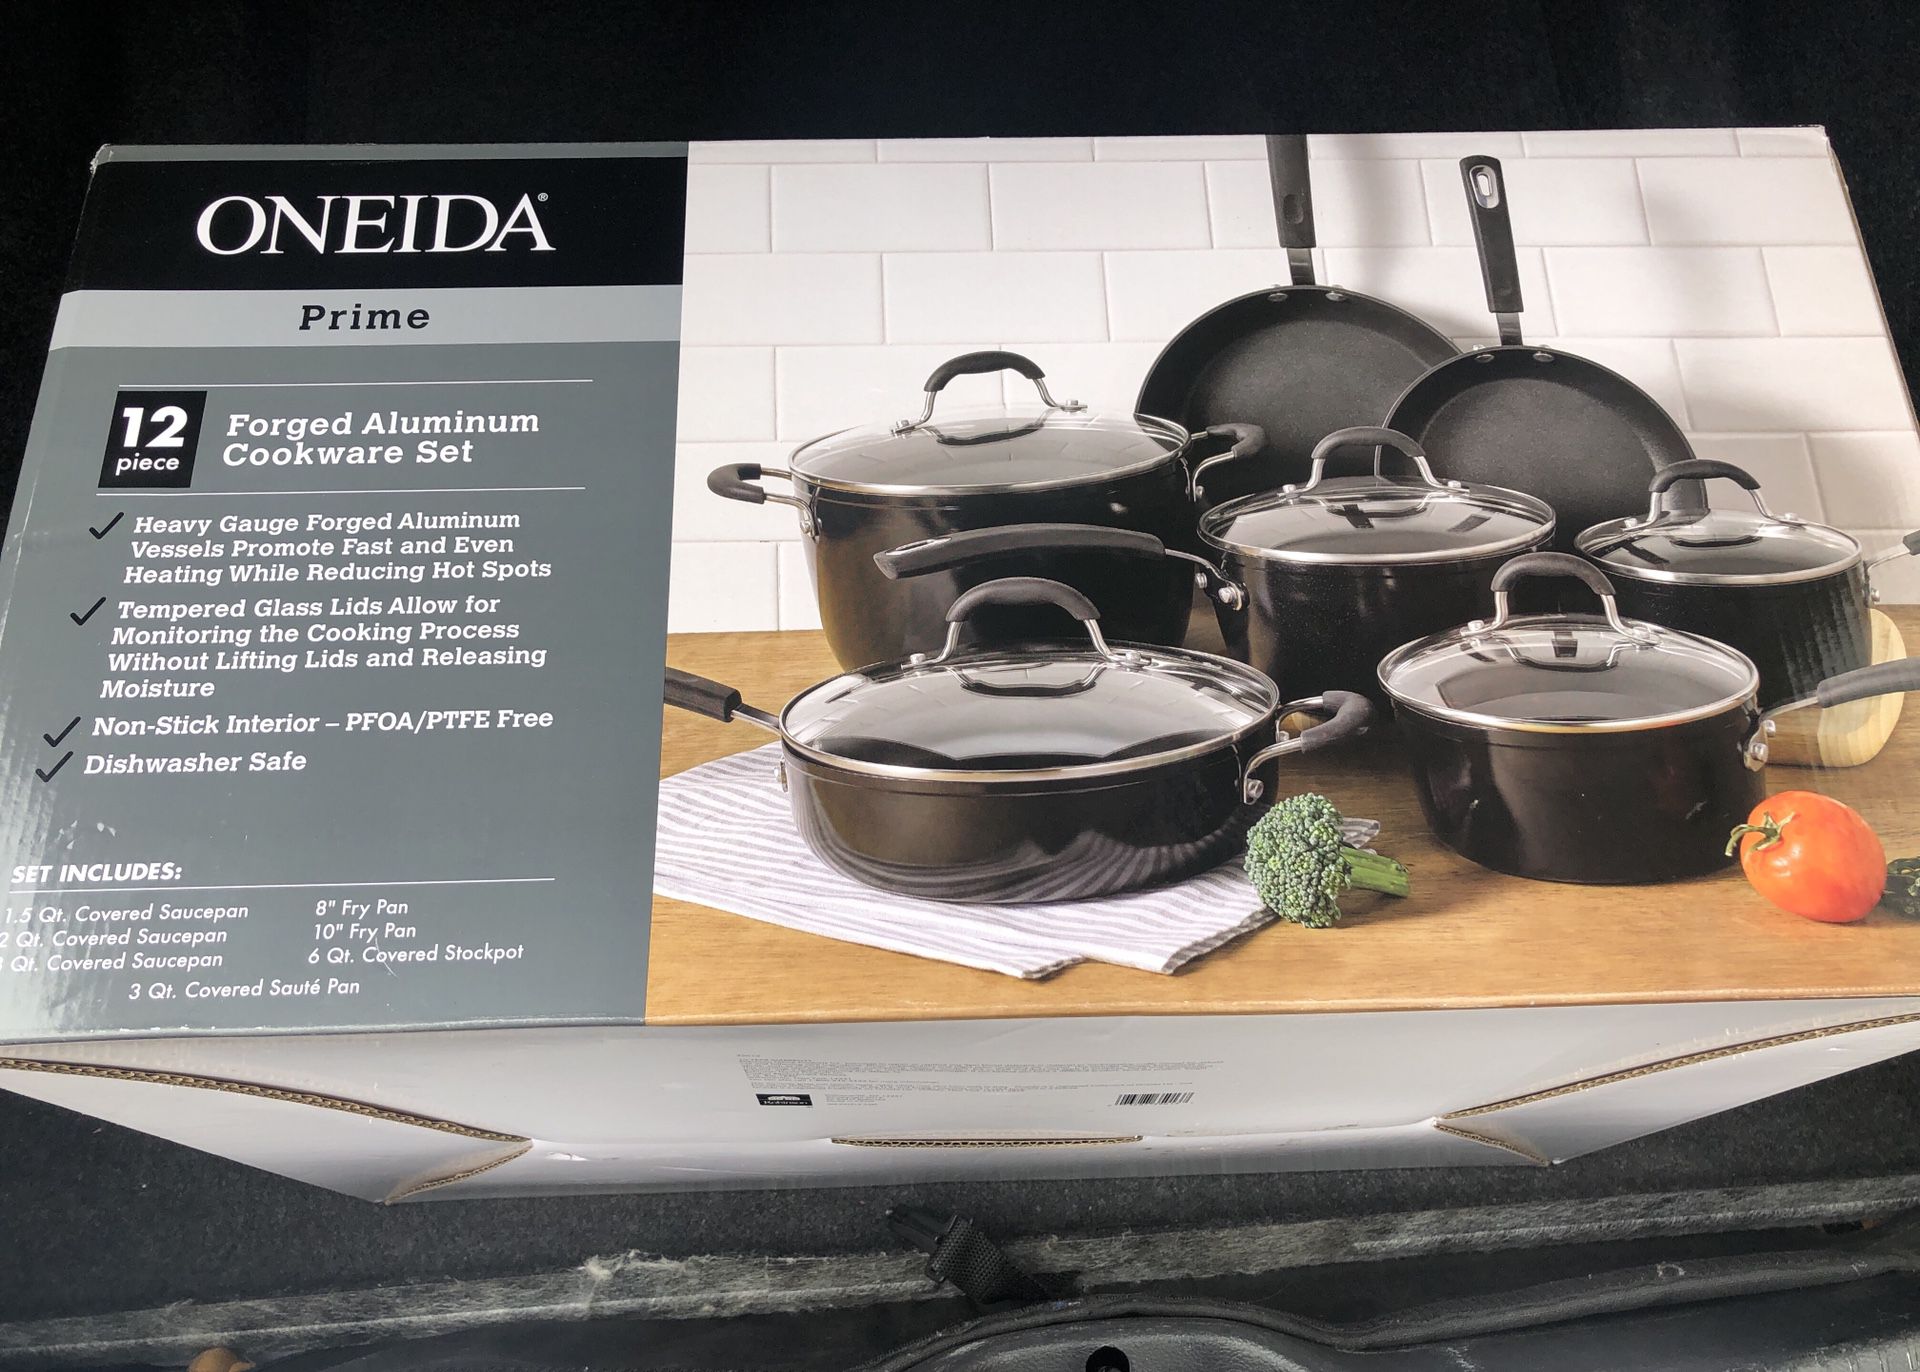 Oneida 12 Piece Forged Aluminum Cookware Set